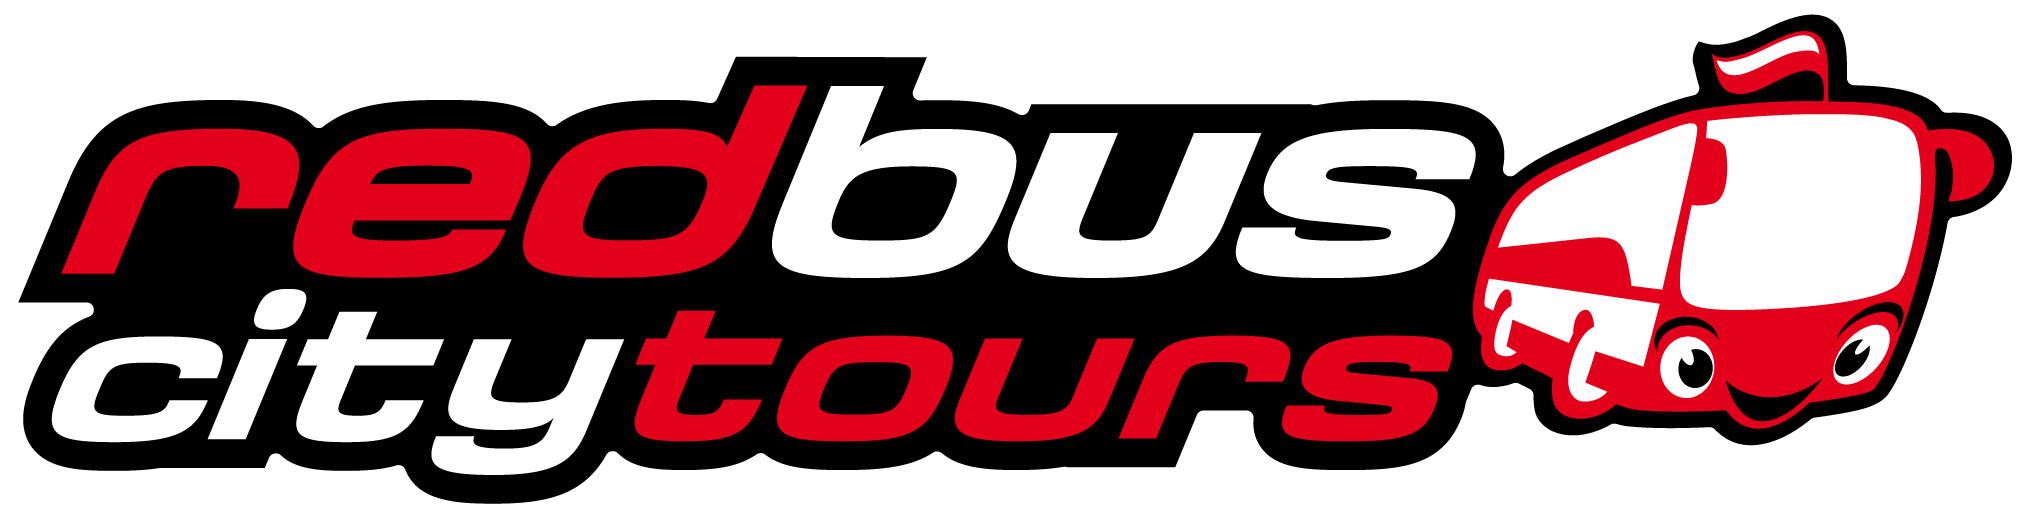 city tour logo